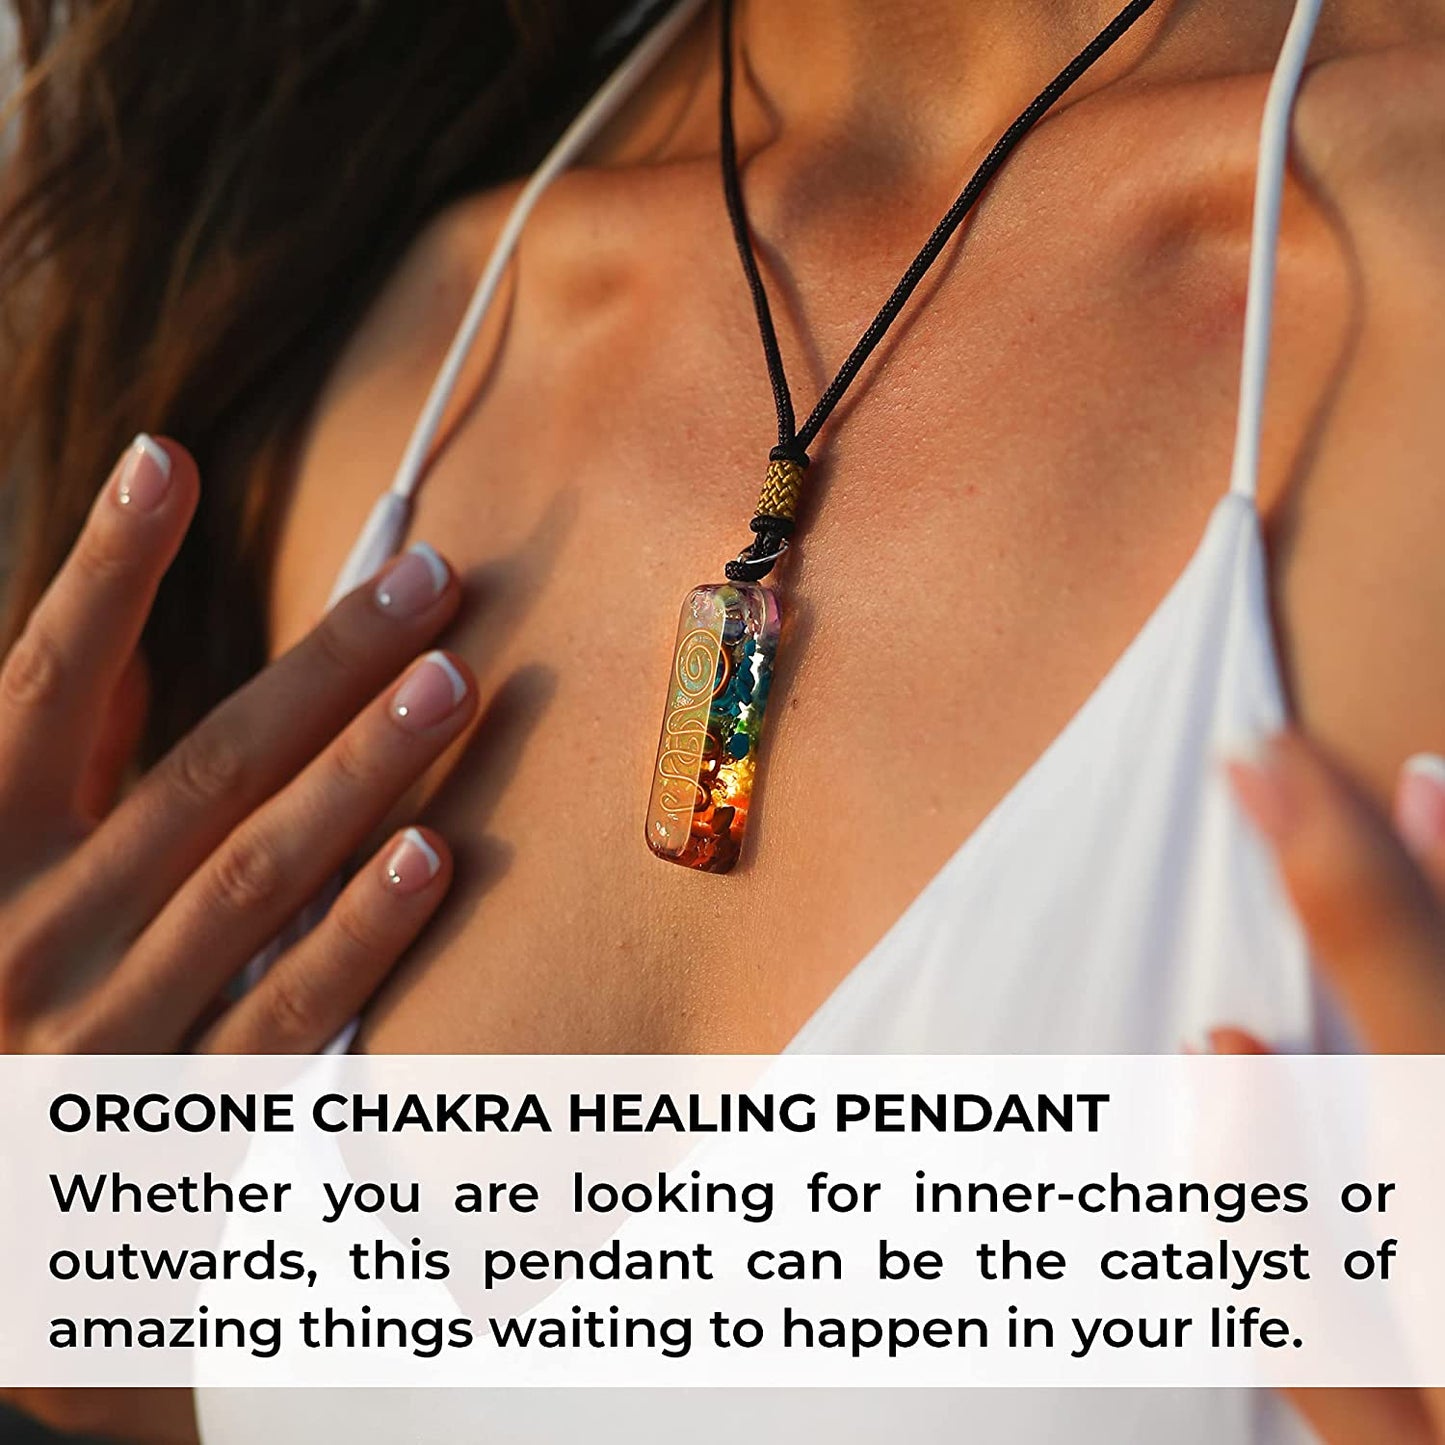 7 Chakra Retro Reiki Healing Energy Crystal Pendant